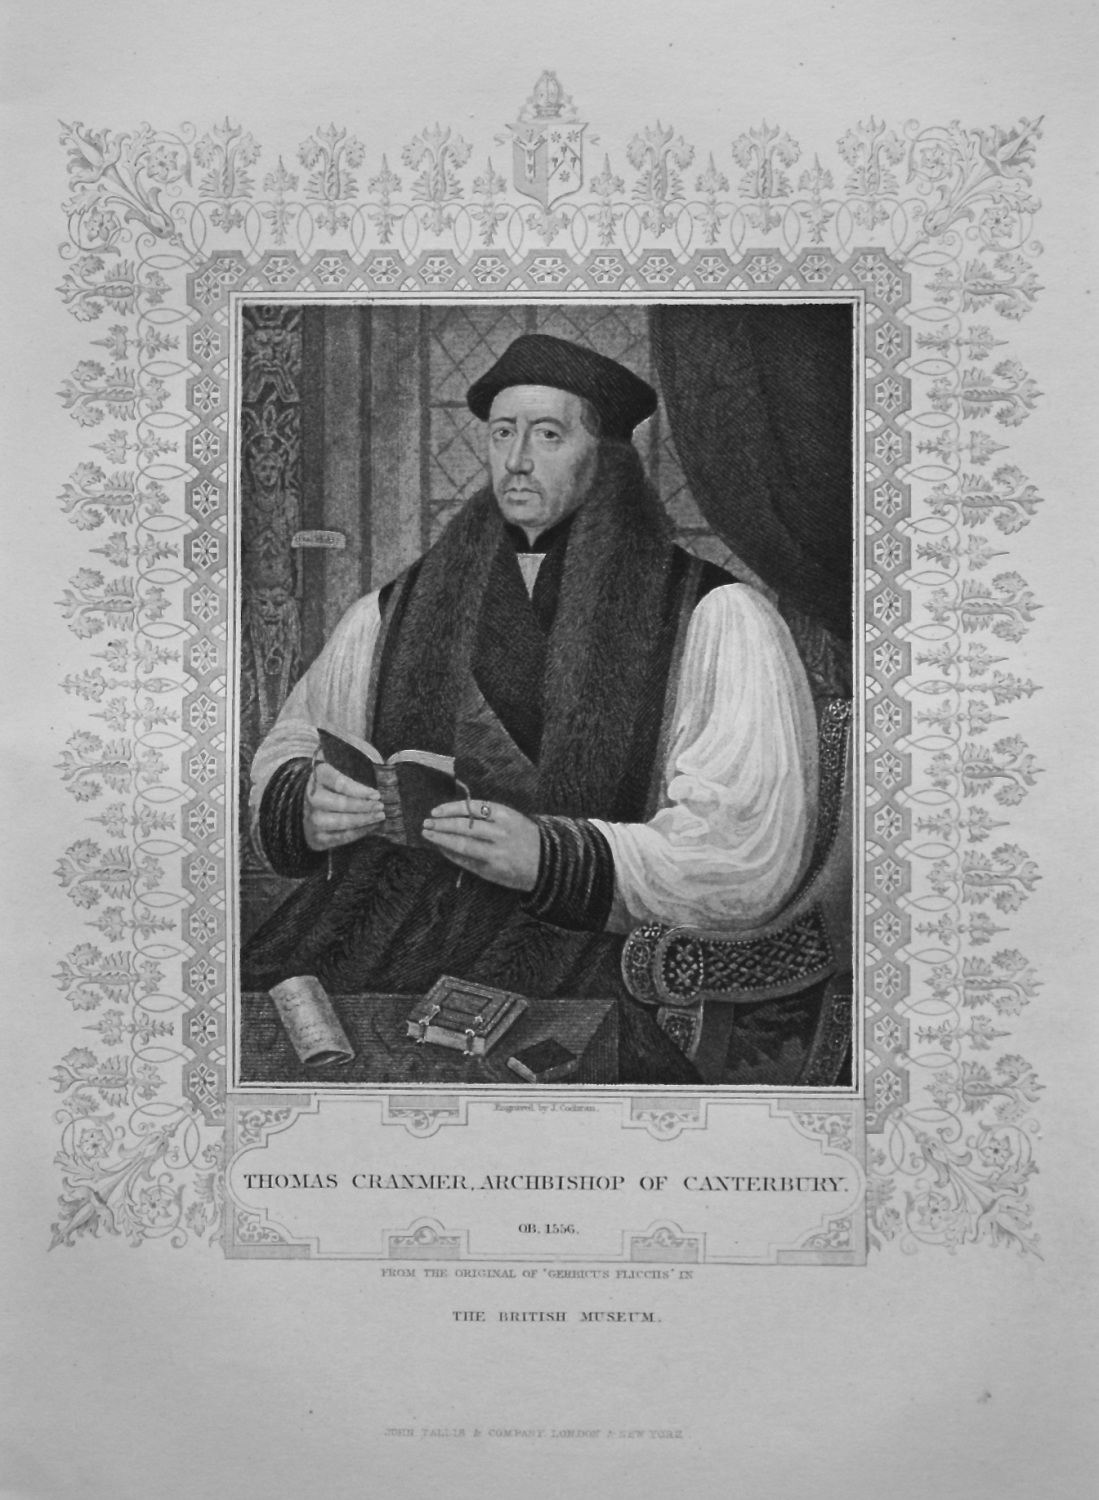 Thomas Cranmer, Archbishop of Canterbury. OB. 1556. From the original of 